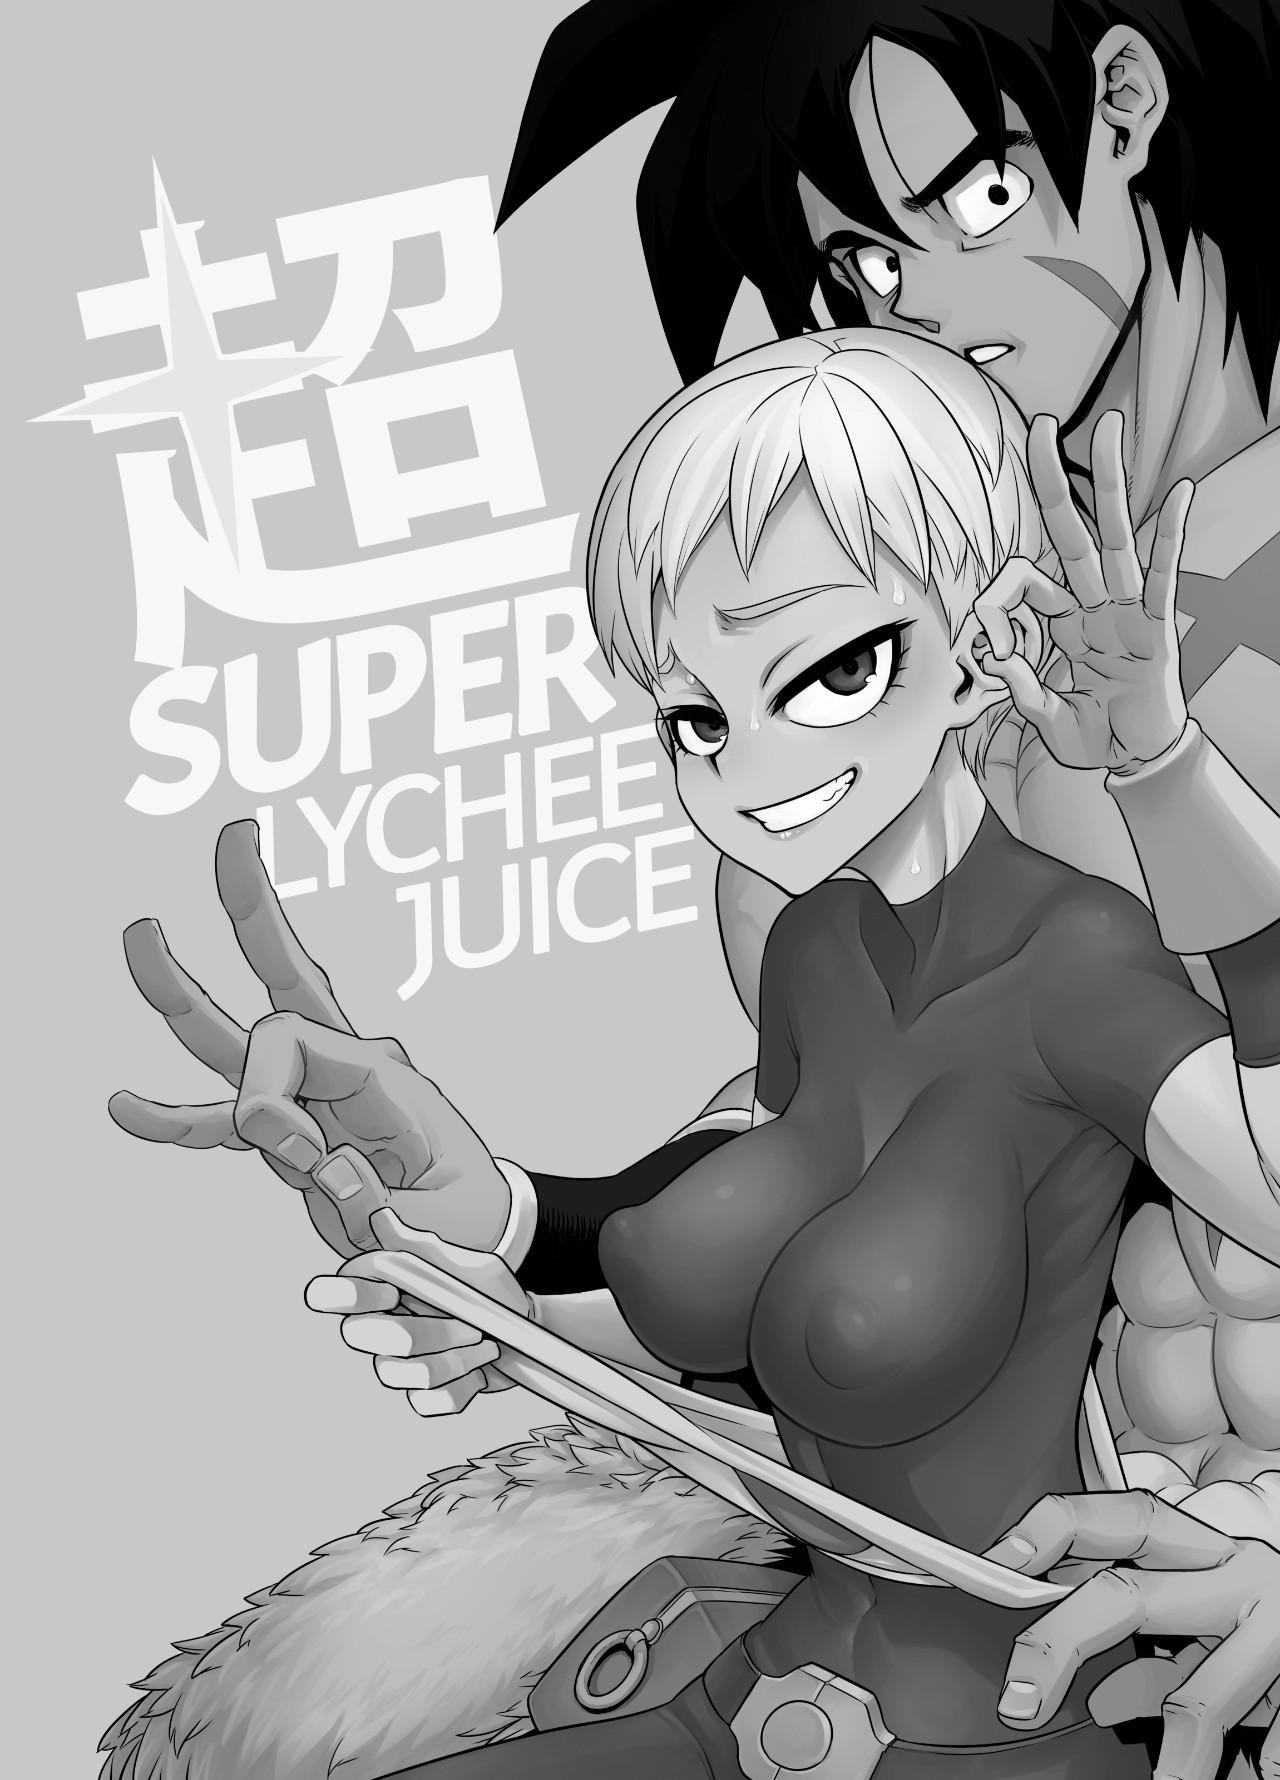 Super Lychee Juice Hentai pt-br 02